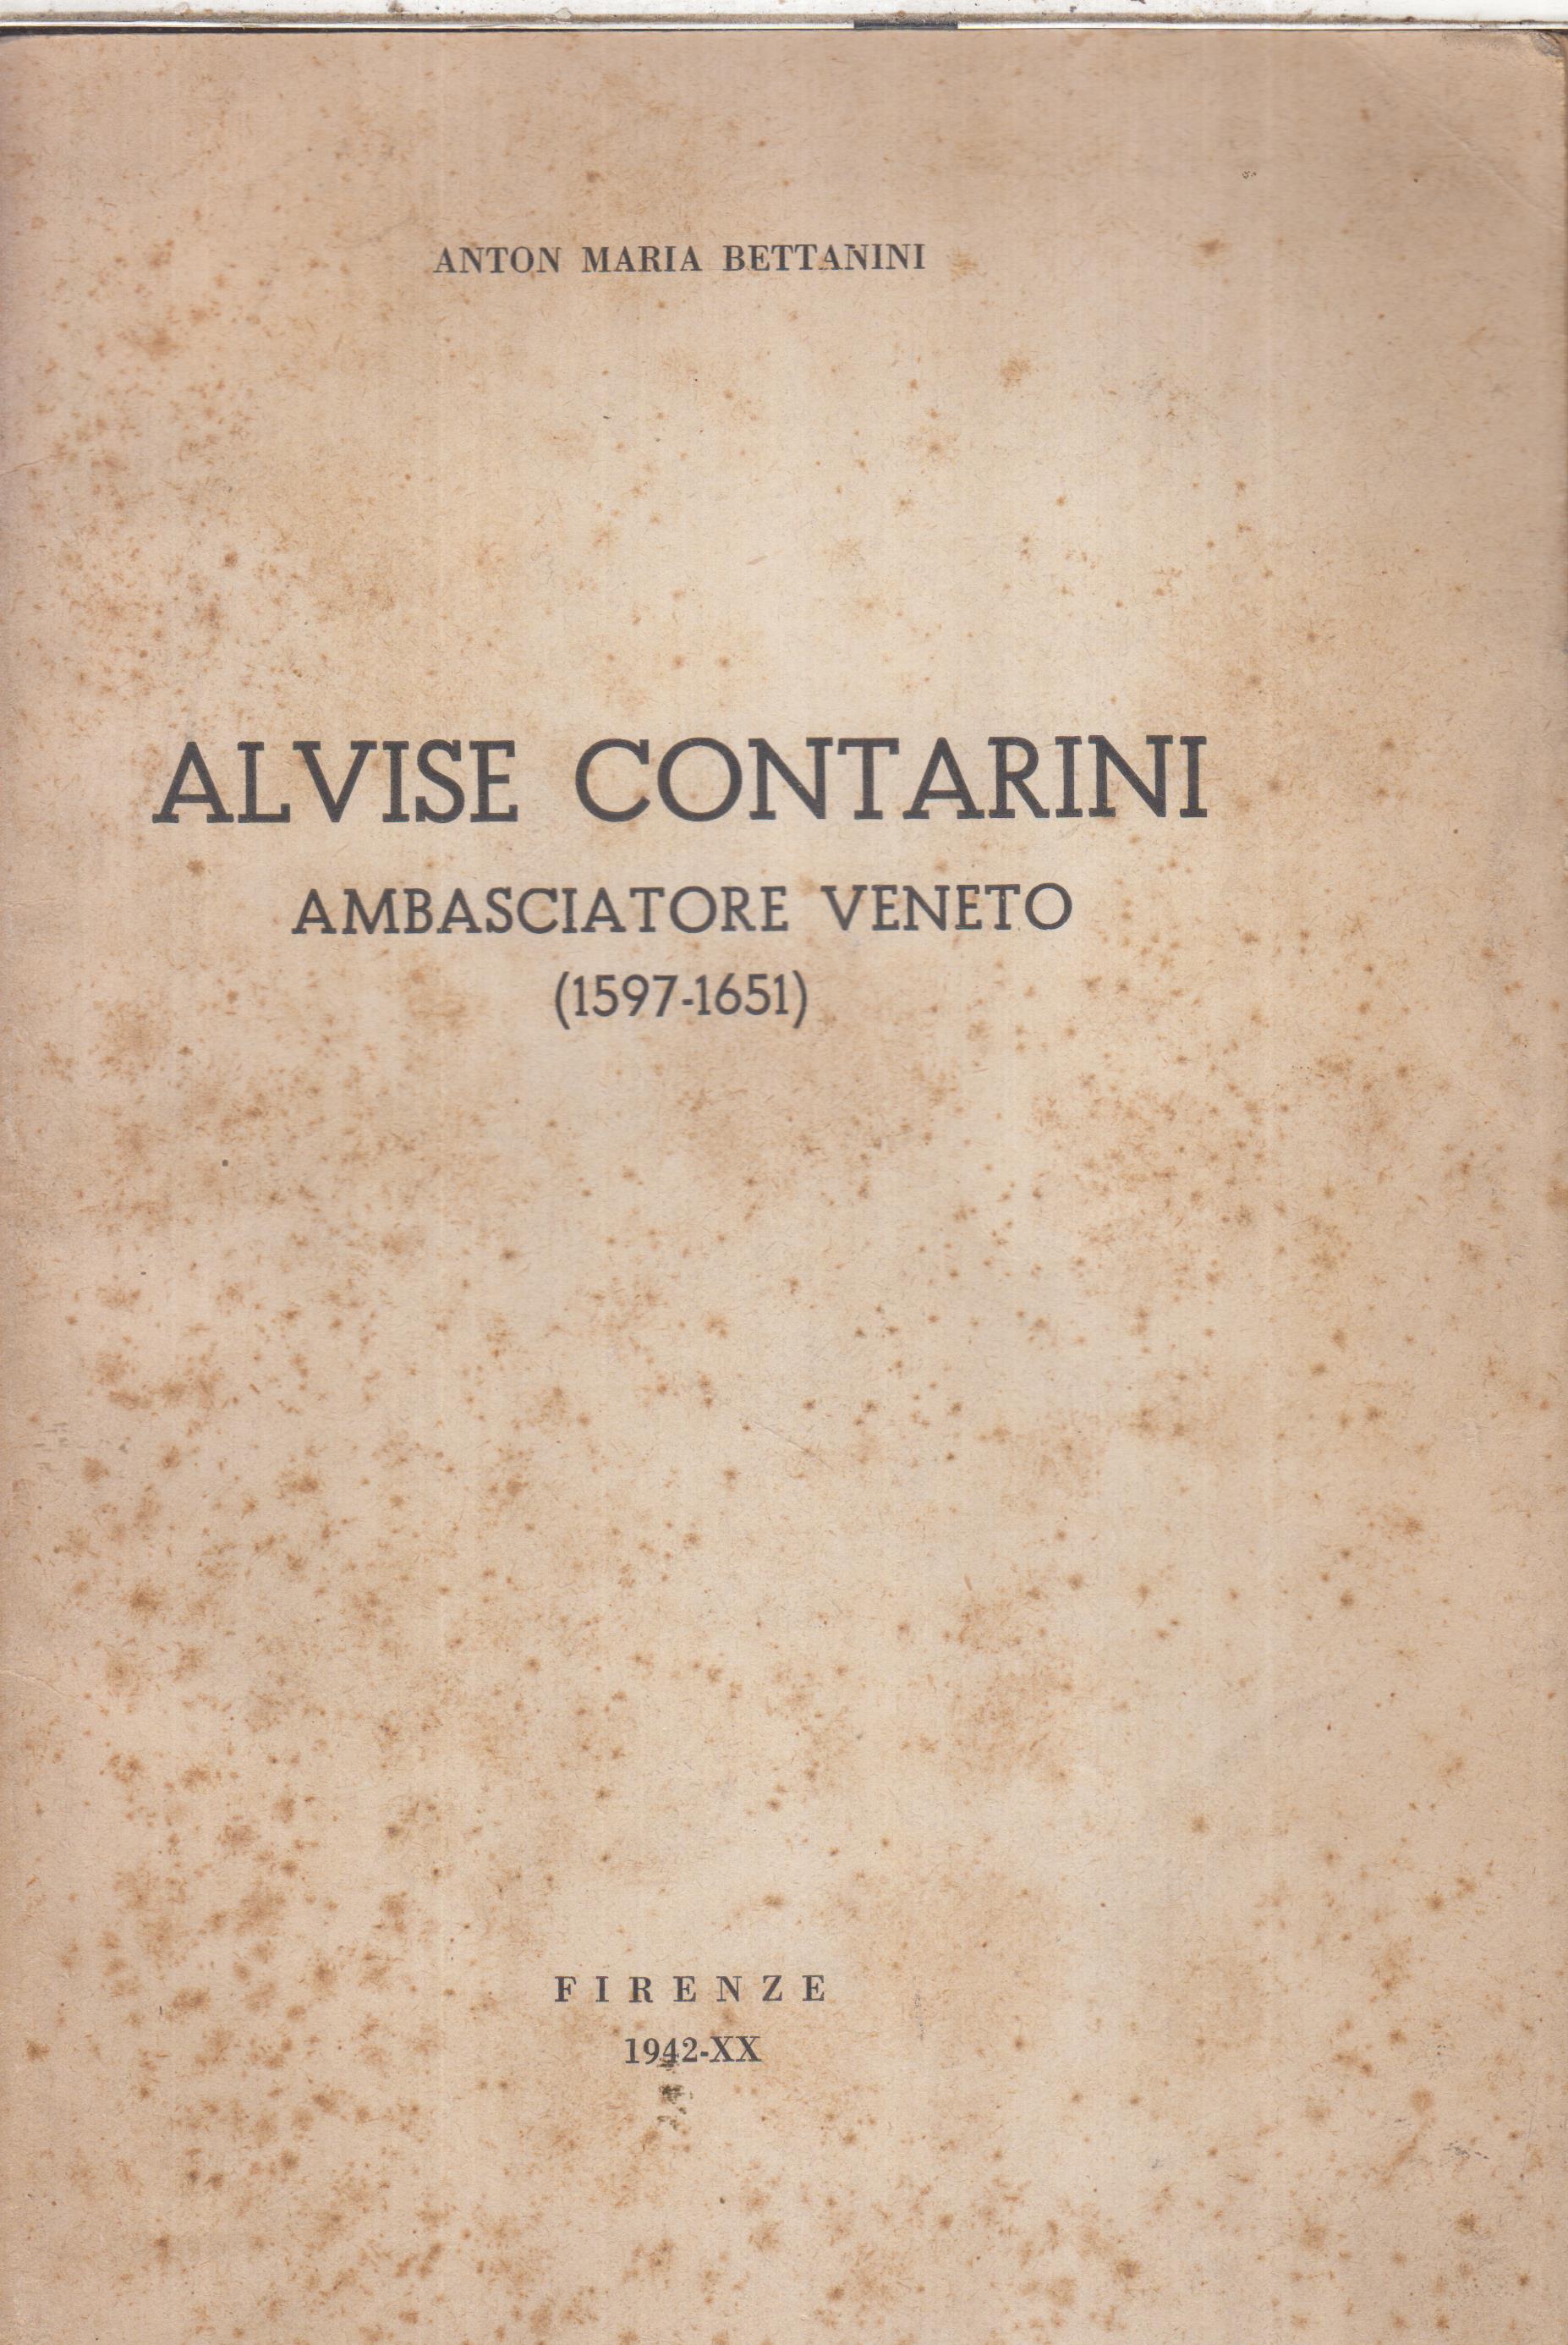 ALVISE CONTRAINI. AMBASCIATORE VENETO (1597-1651)